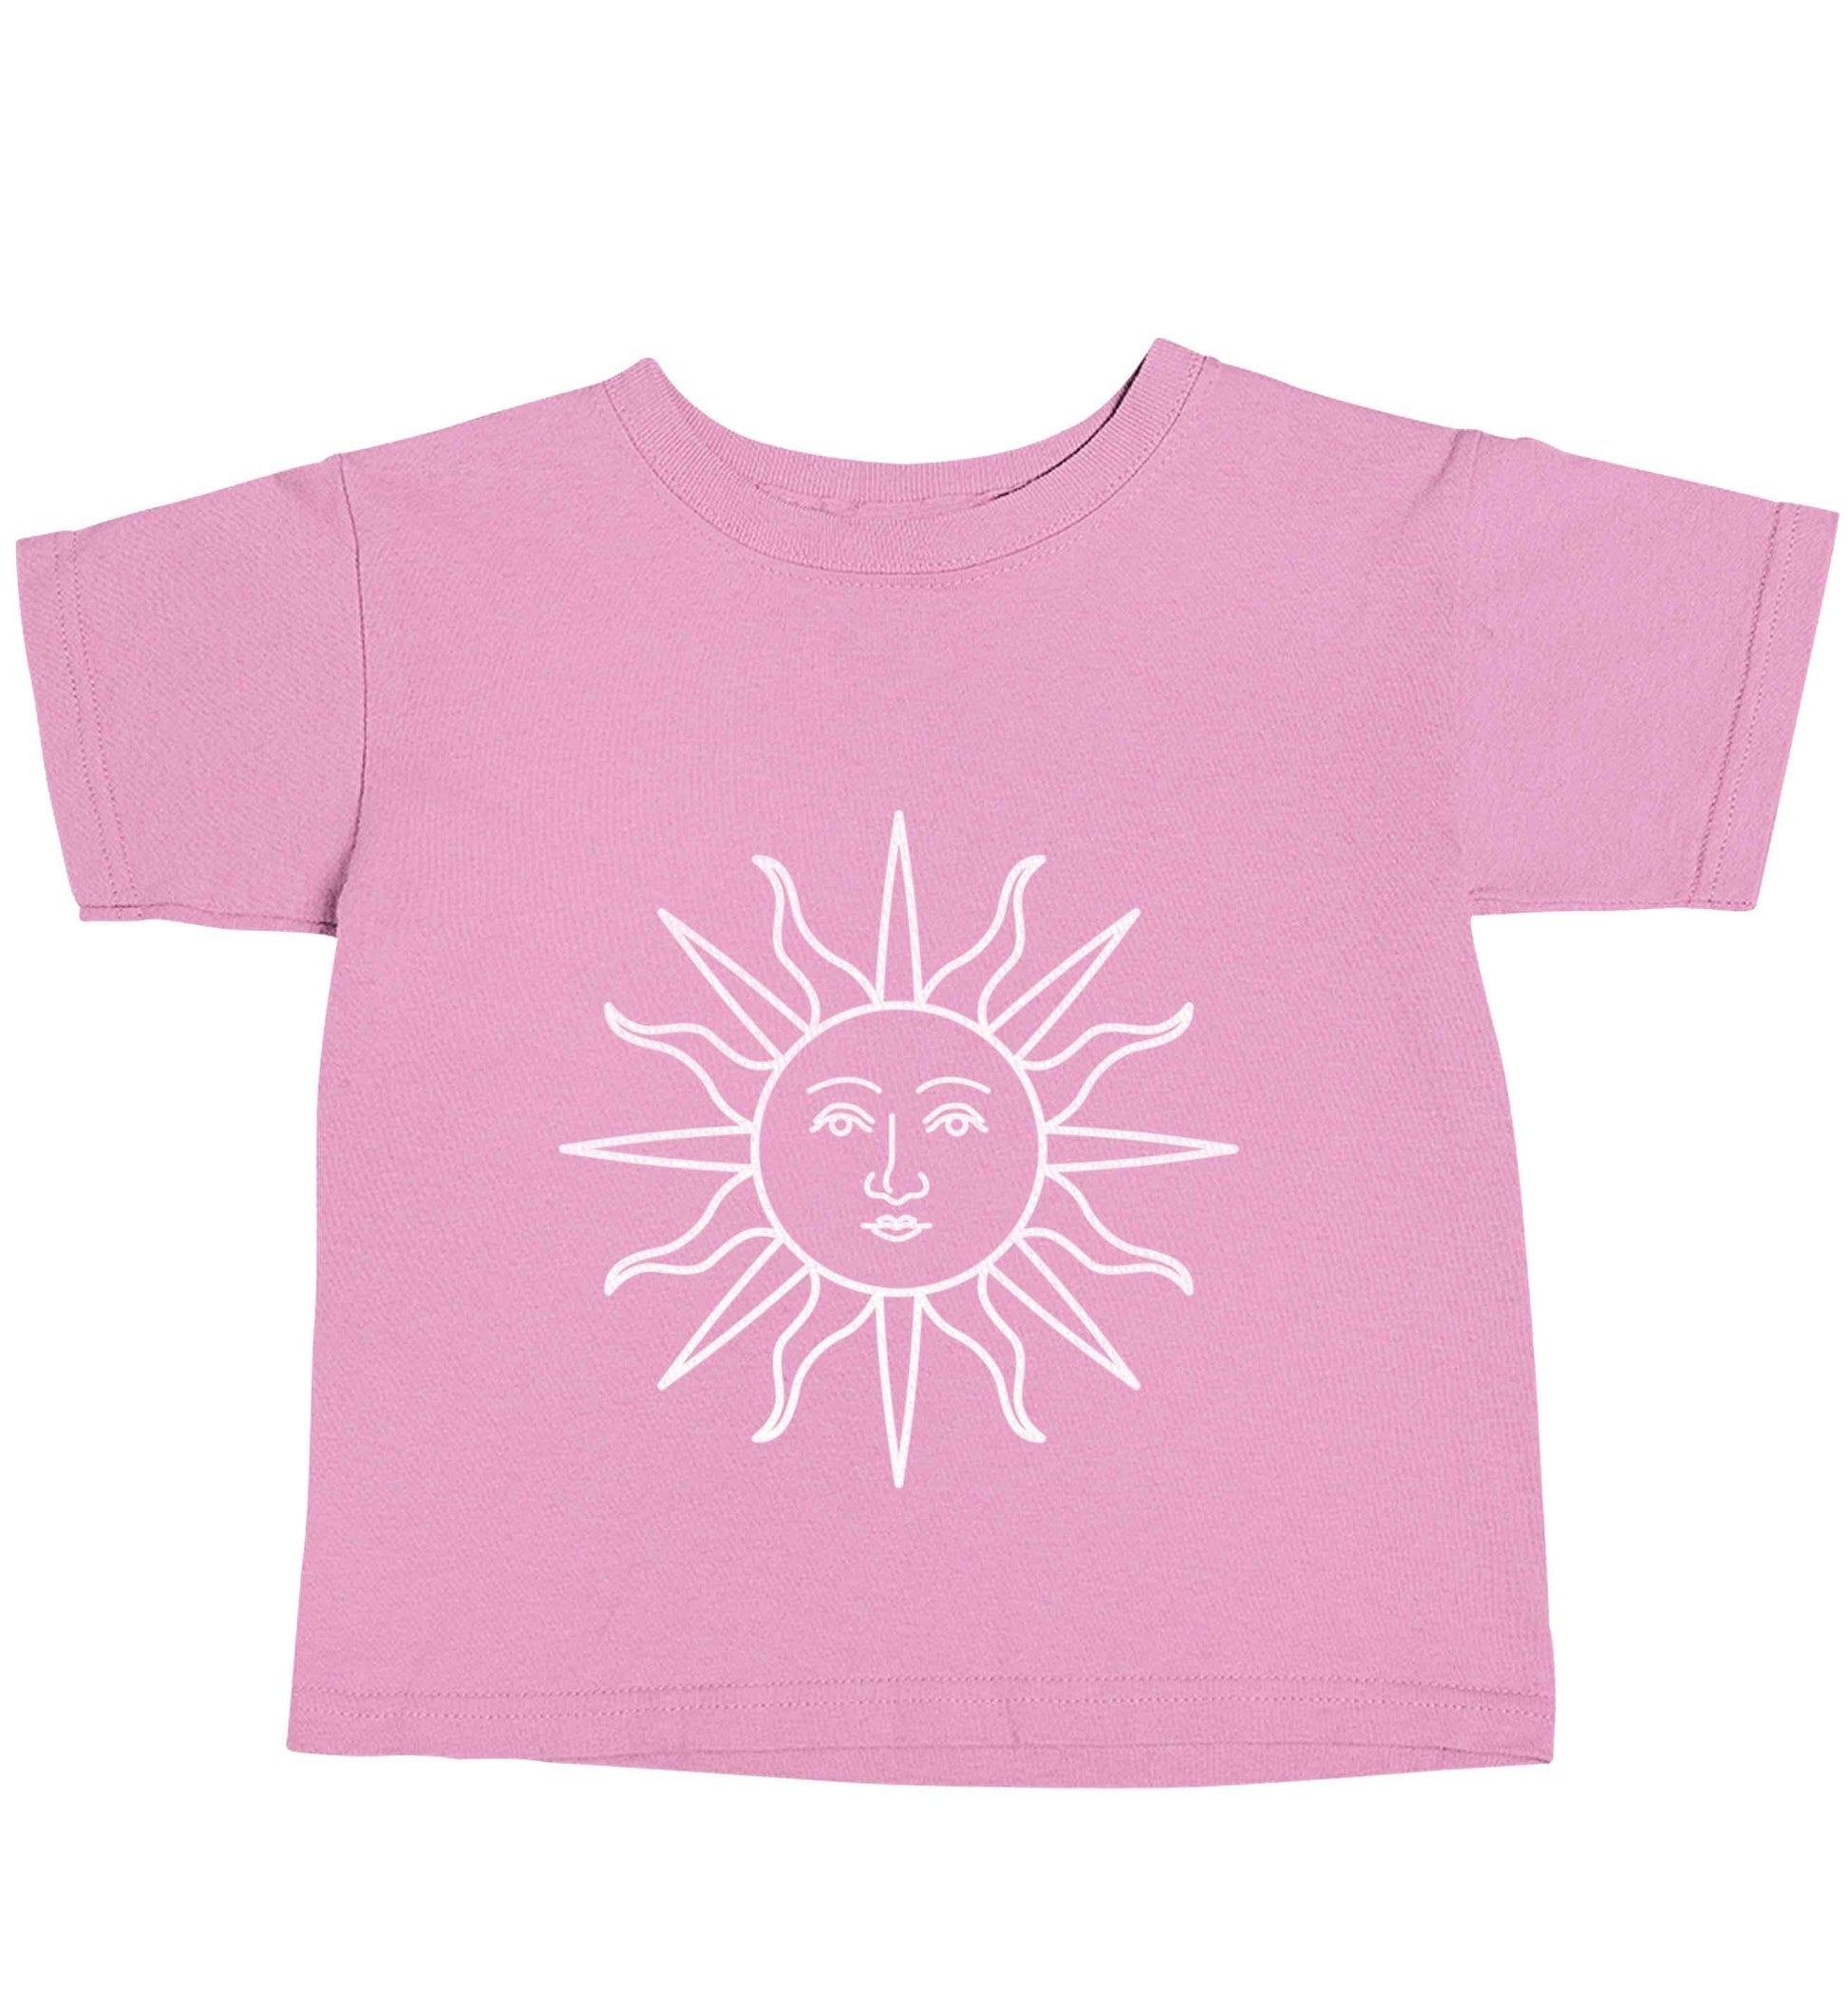 Sun face illustration light pink baby toddler Tshirt 2 Years